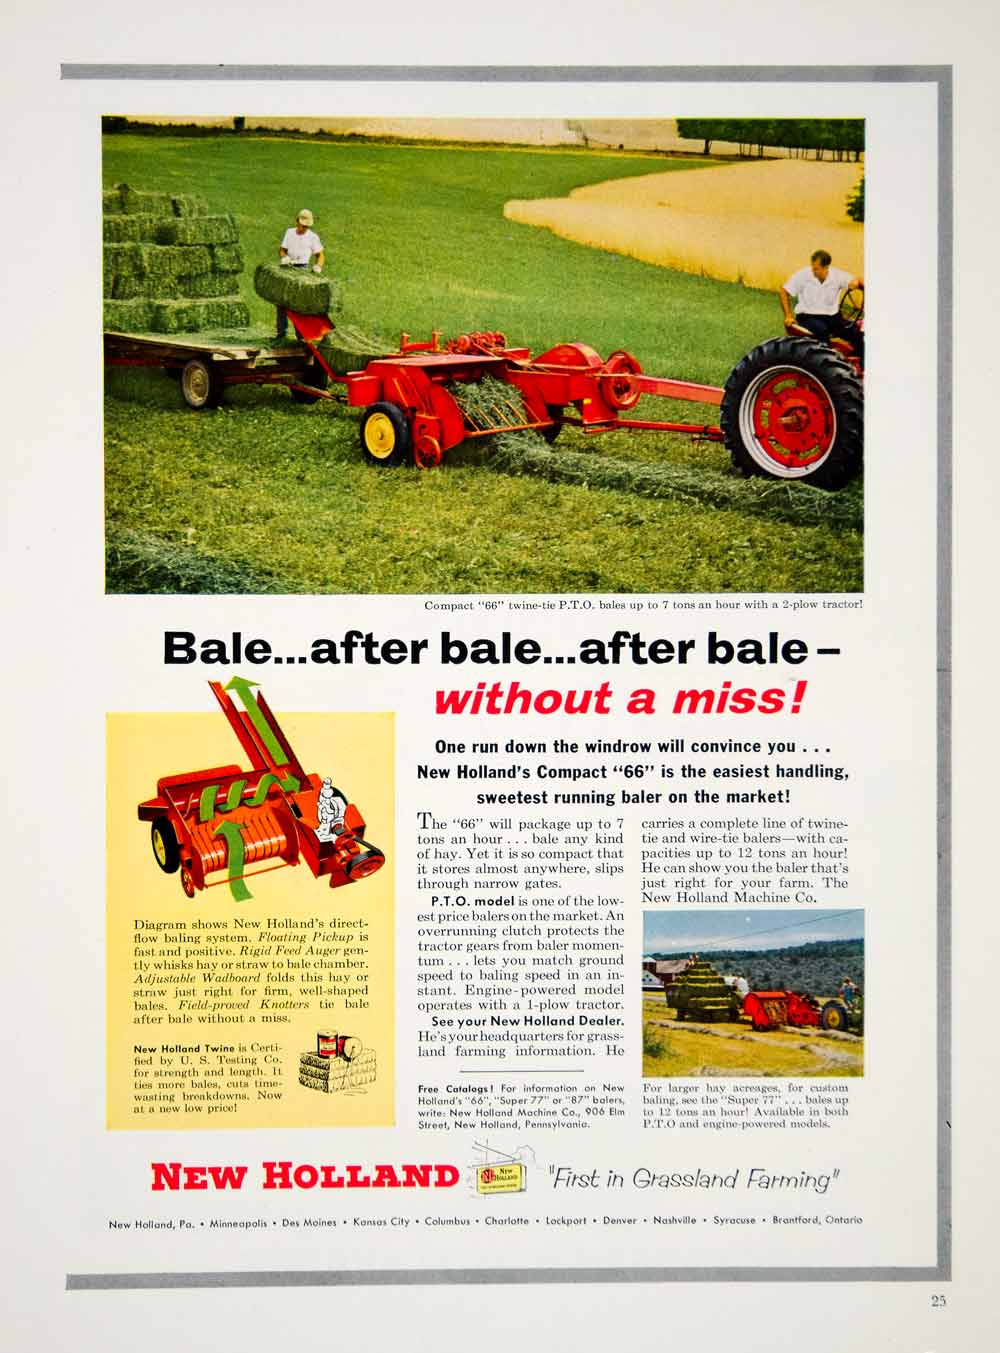 1955 Ad New Holland Compact 66 Baler Hay Maker Machinery Farming PTO Field YFQ1